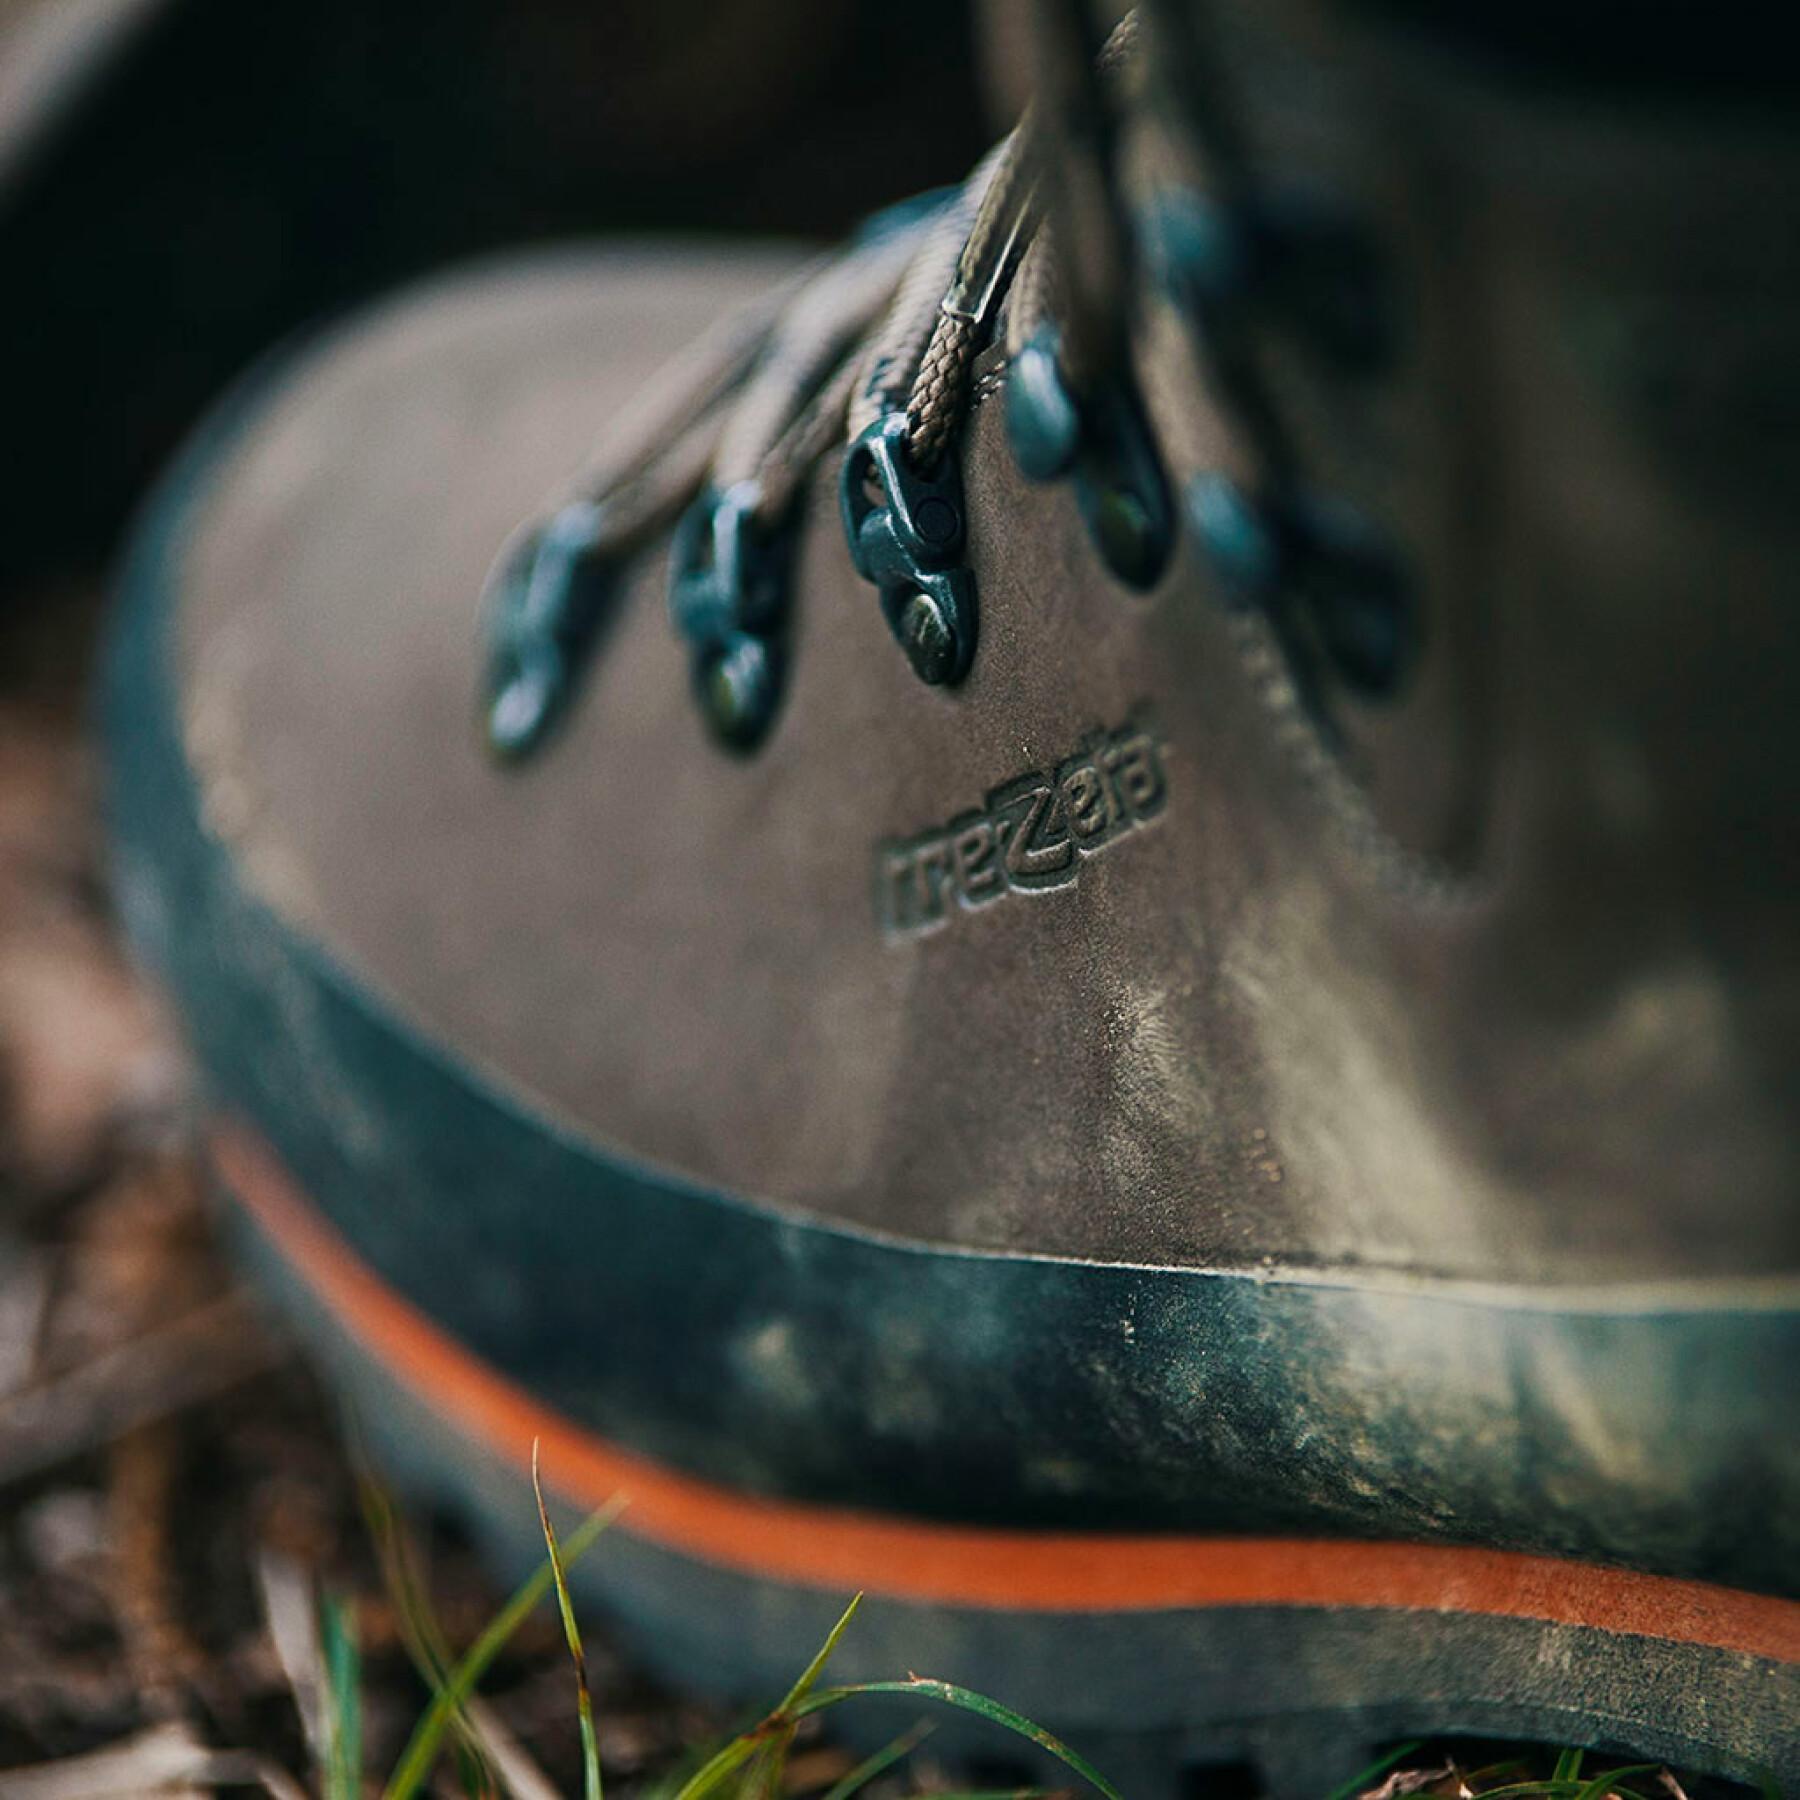 Hiking shoes Trezeta Top Evo Leather